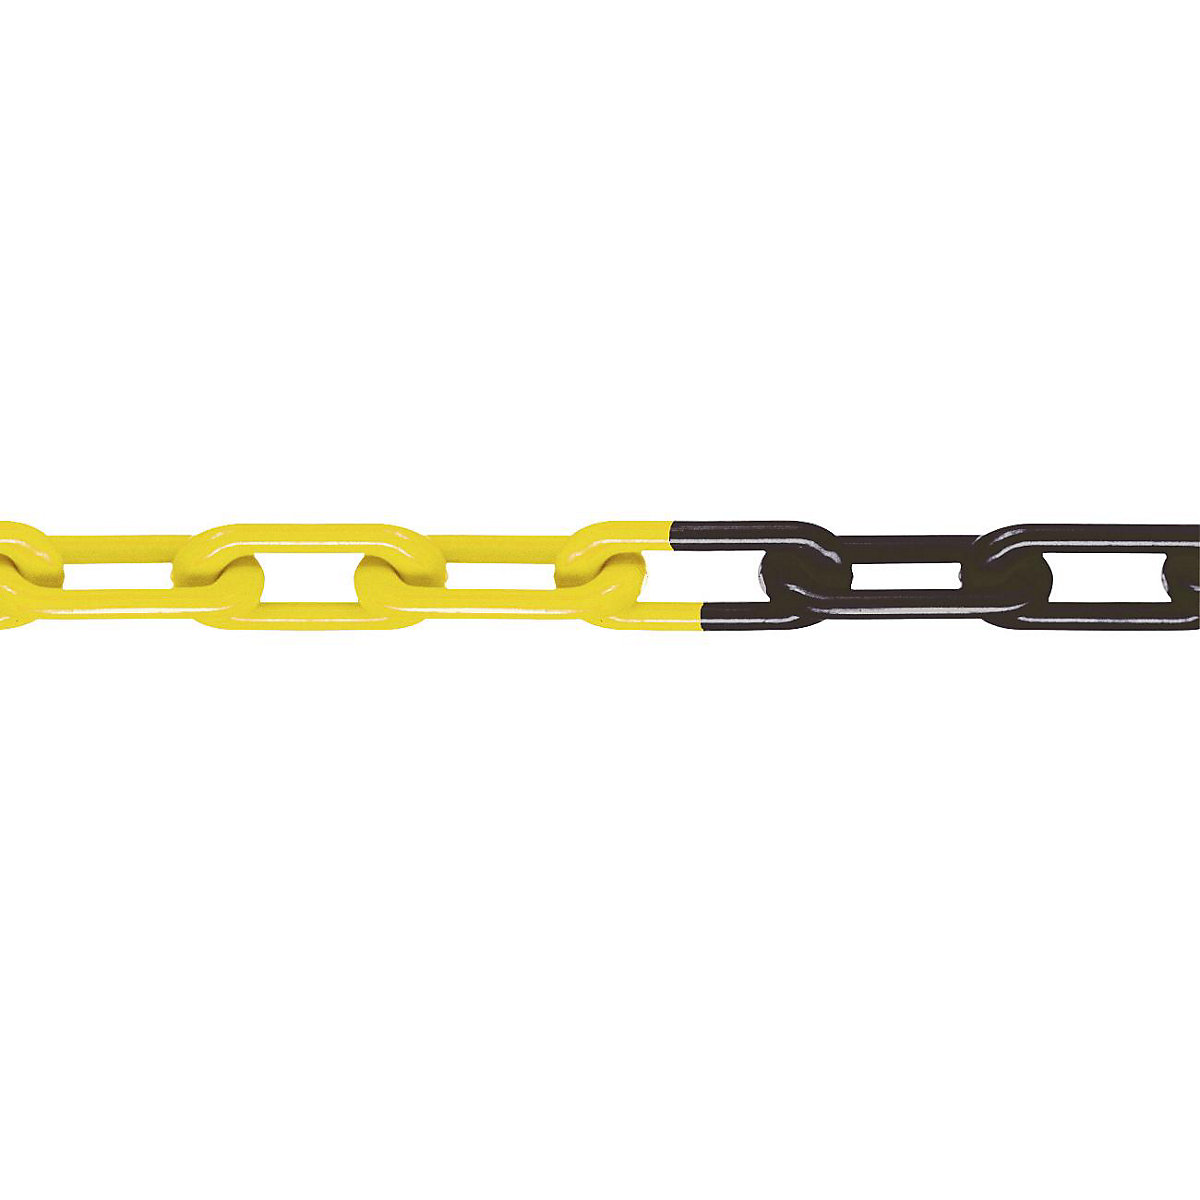 Nylon chain, MNK quality standard 8, band length 25 m, black-yellow, 4+ items-3